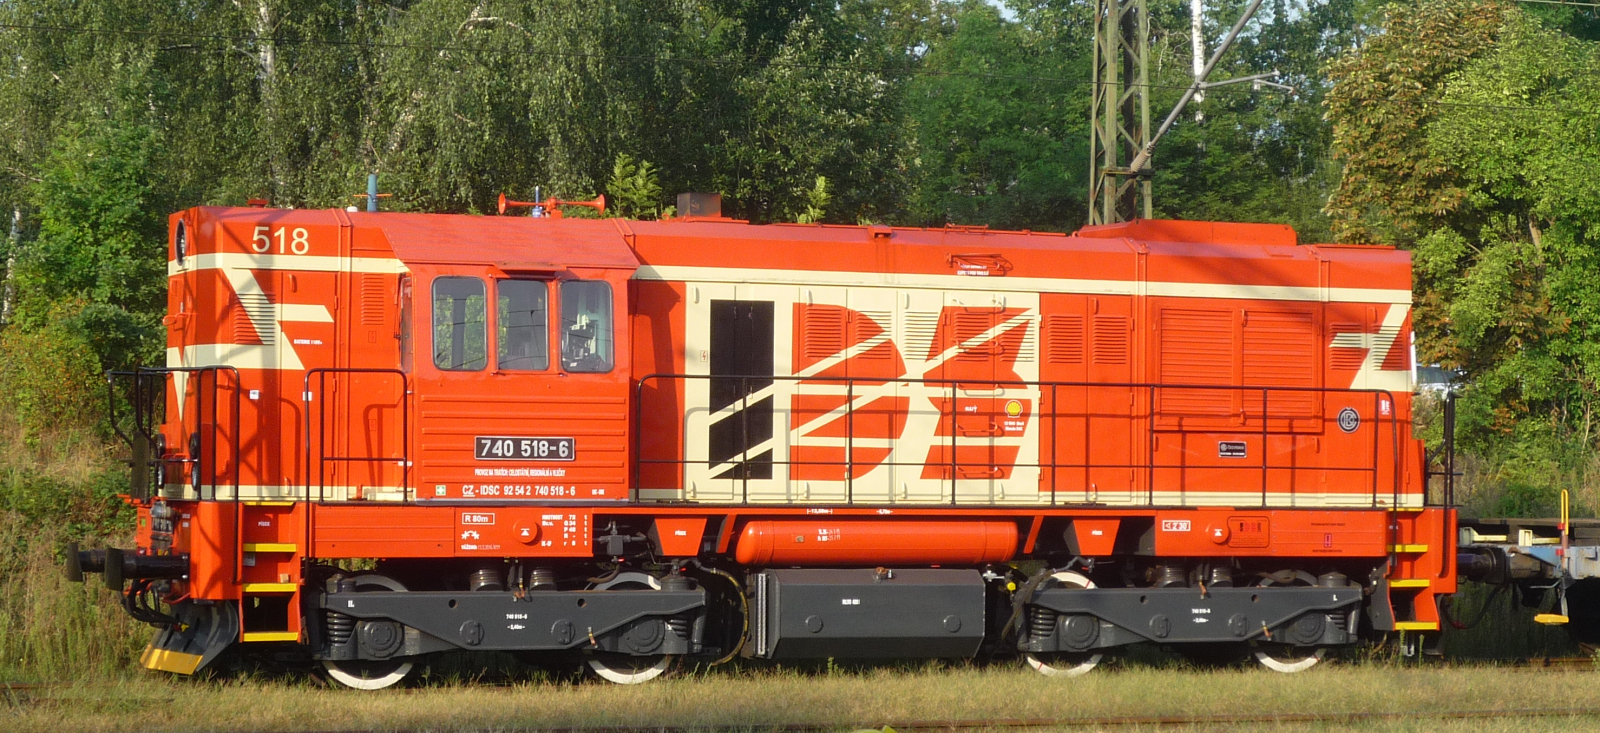 740 518 in August 2019 in Havlíckuv Brod